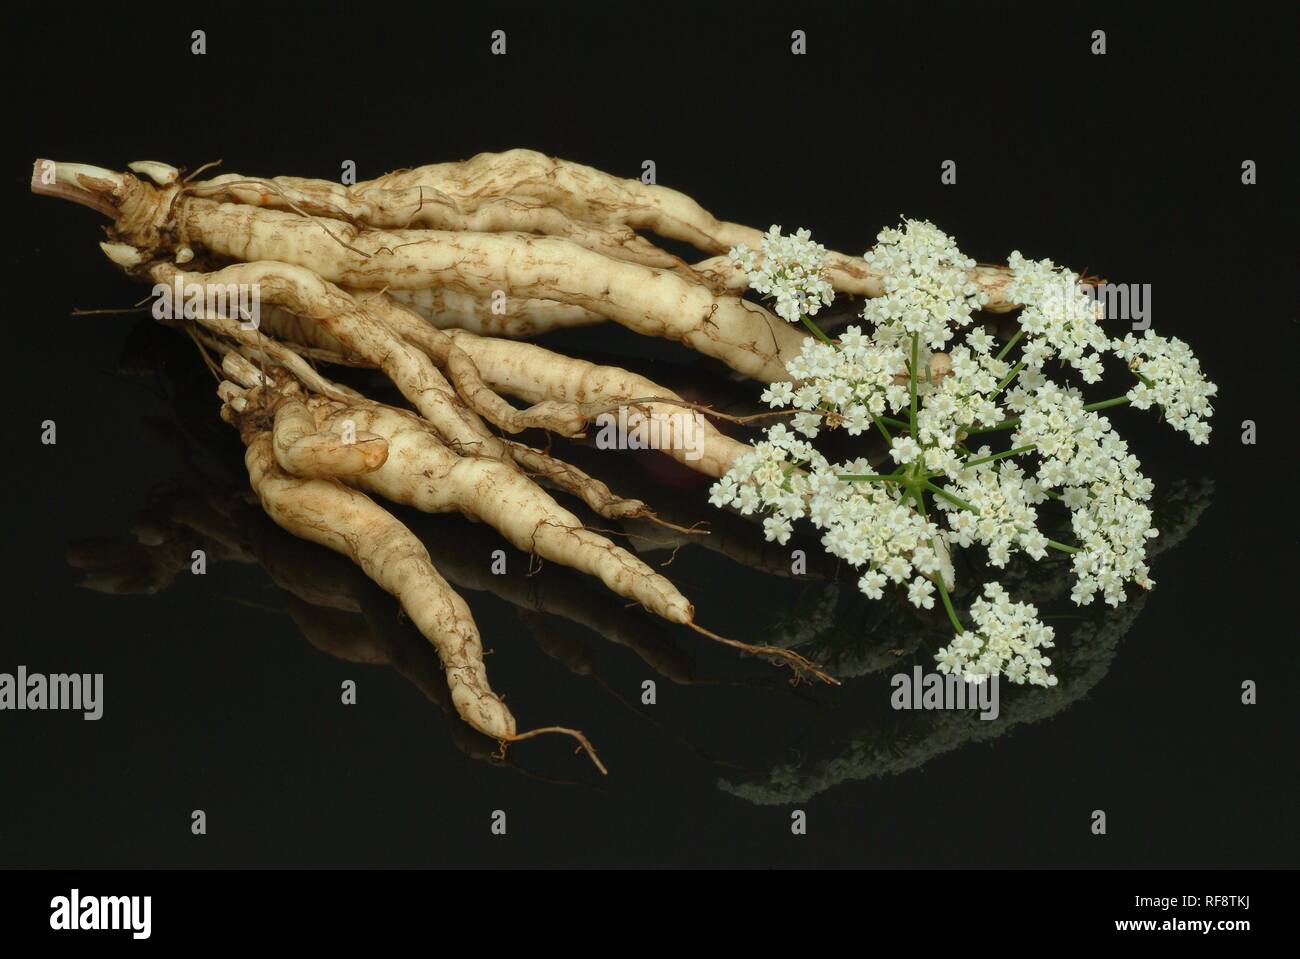 Produce, Skirret (Sium sisarum), fresh roots, blooms Stock Photo